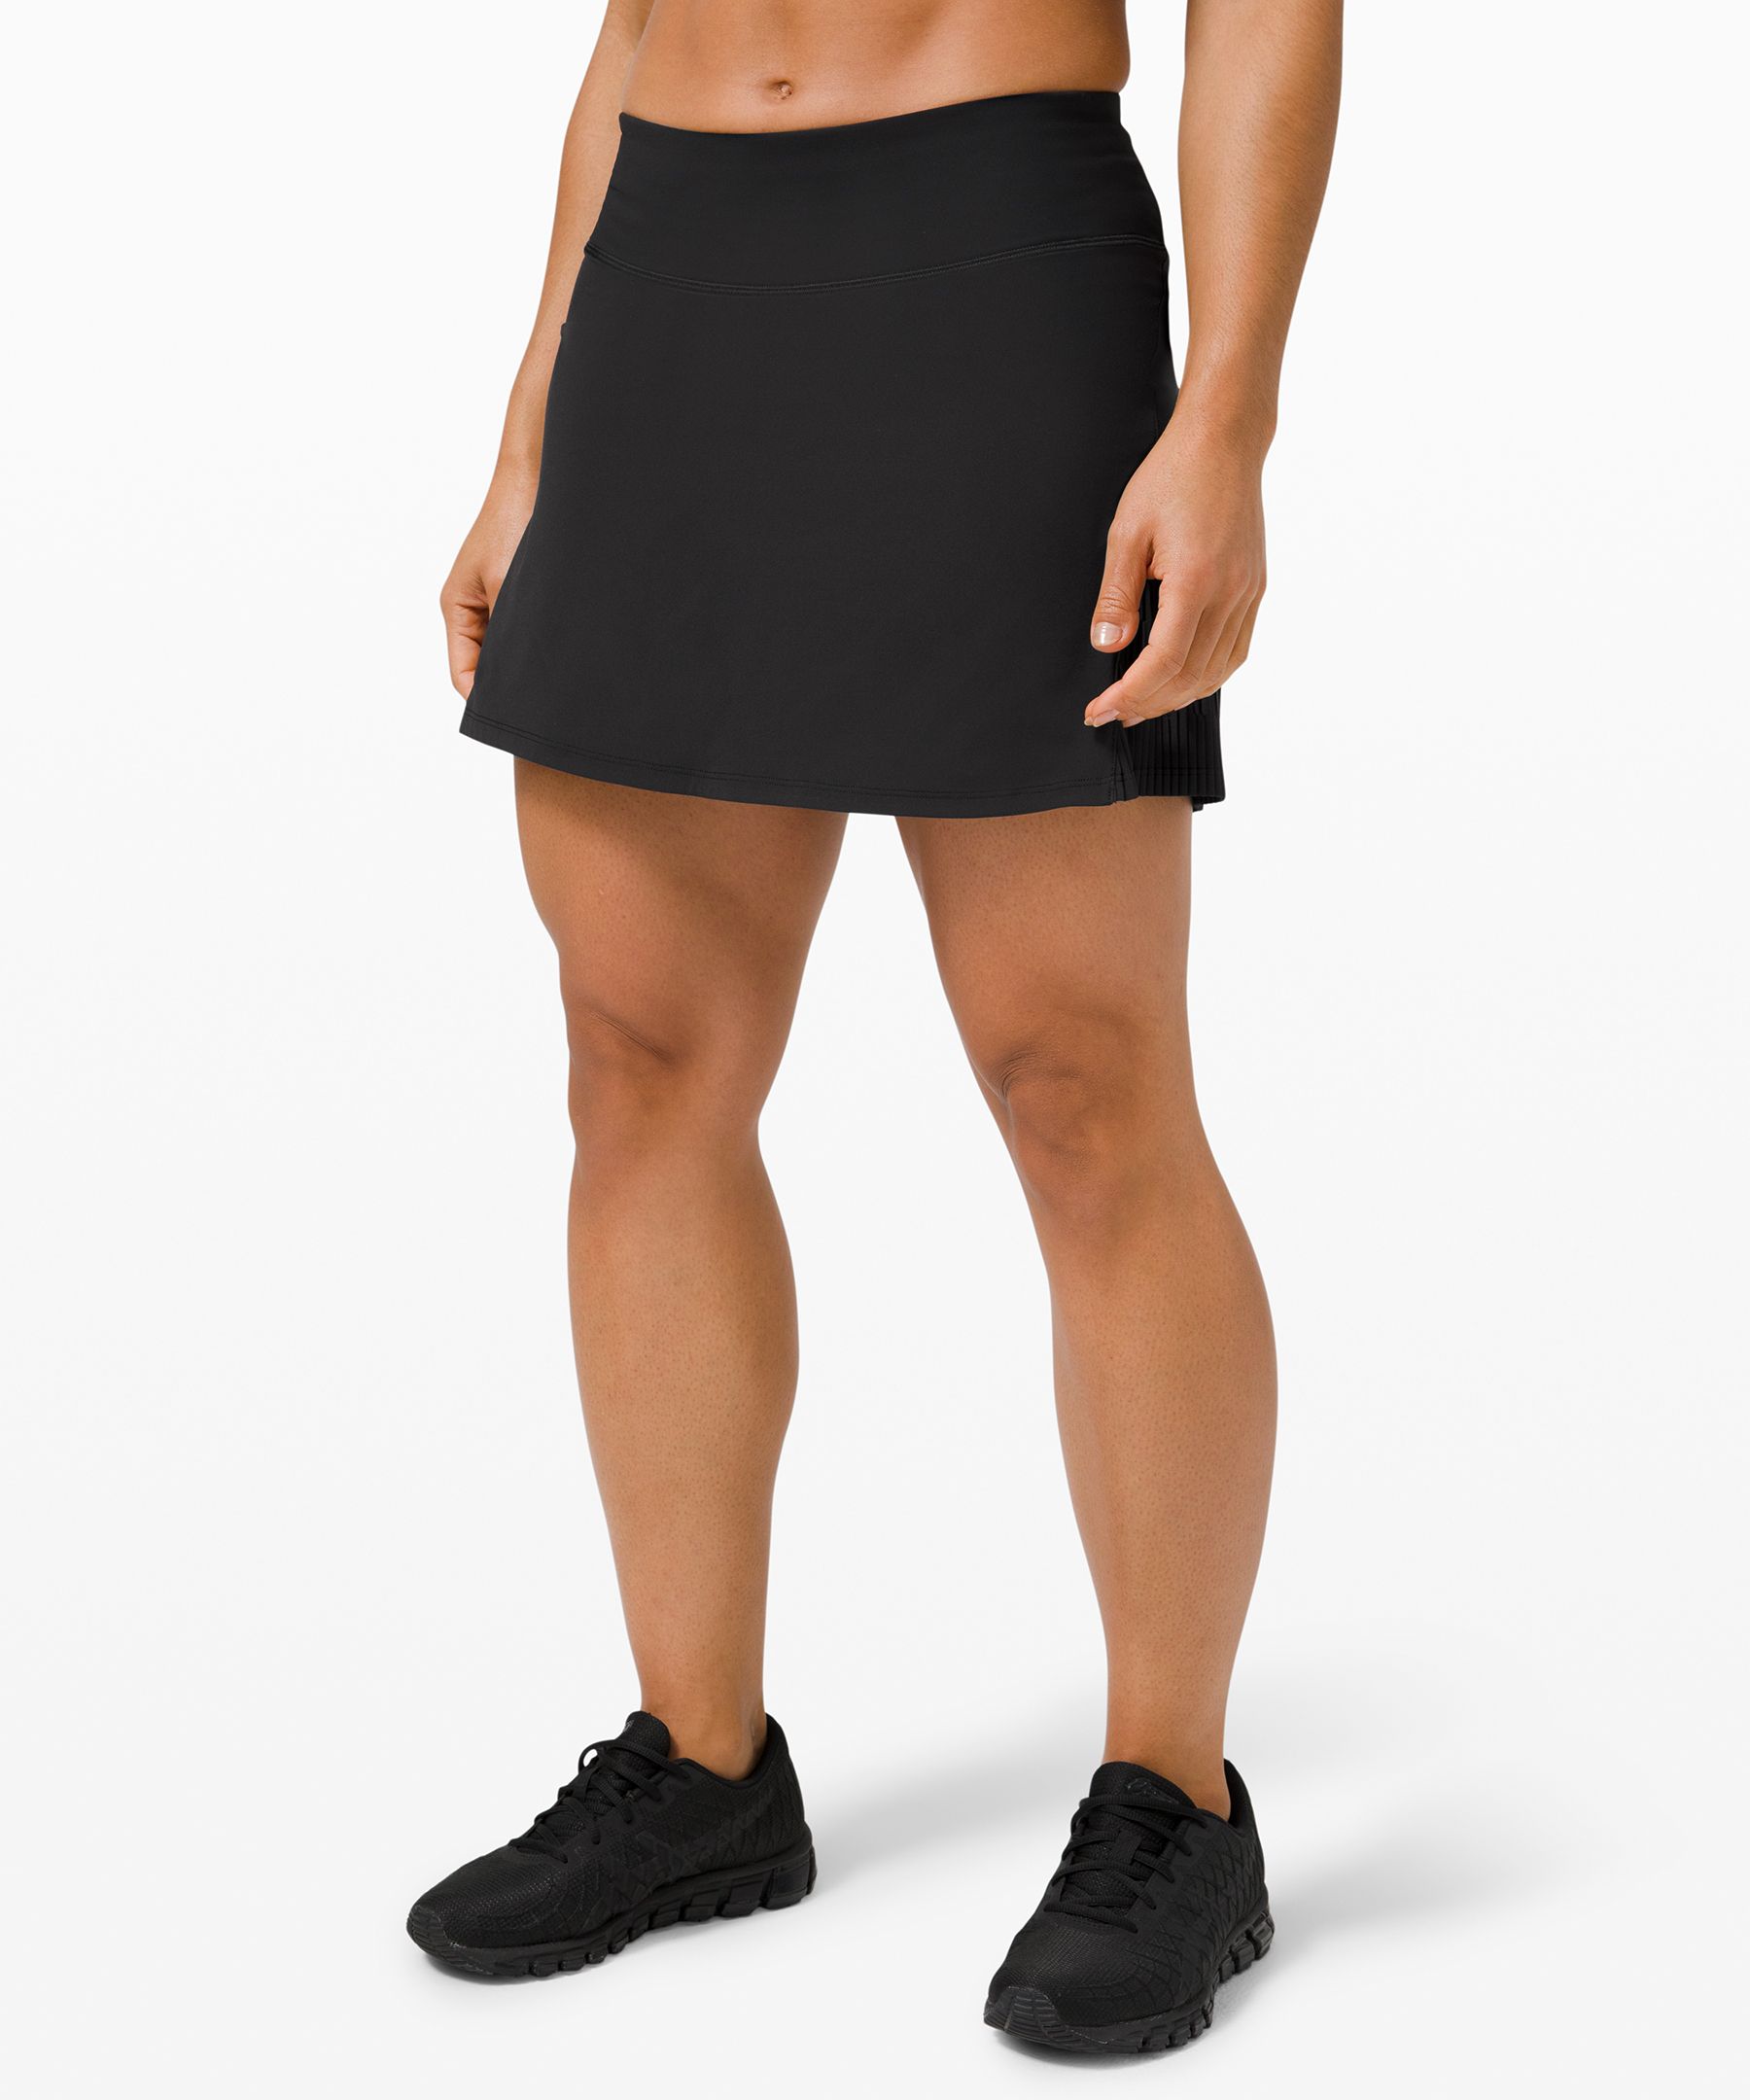 lululemon black skirt